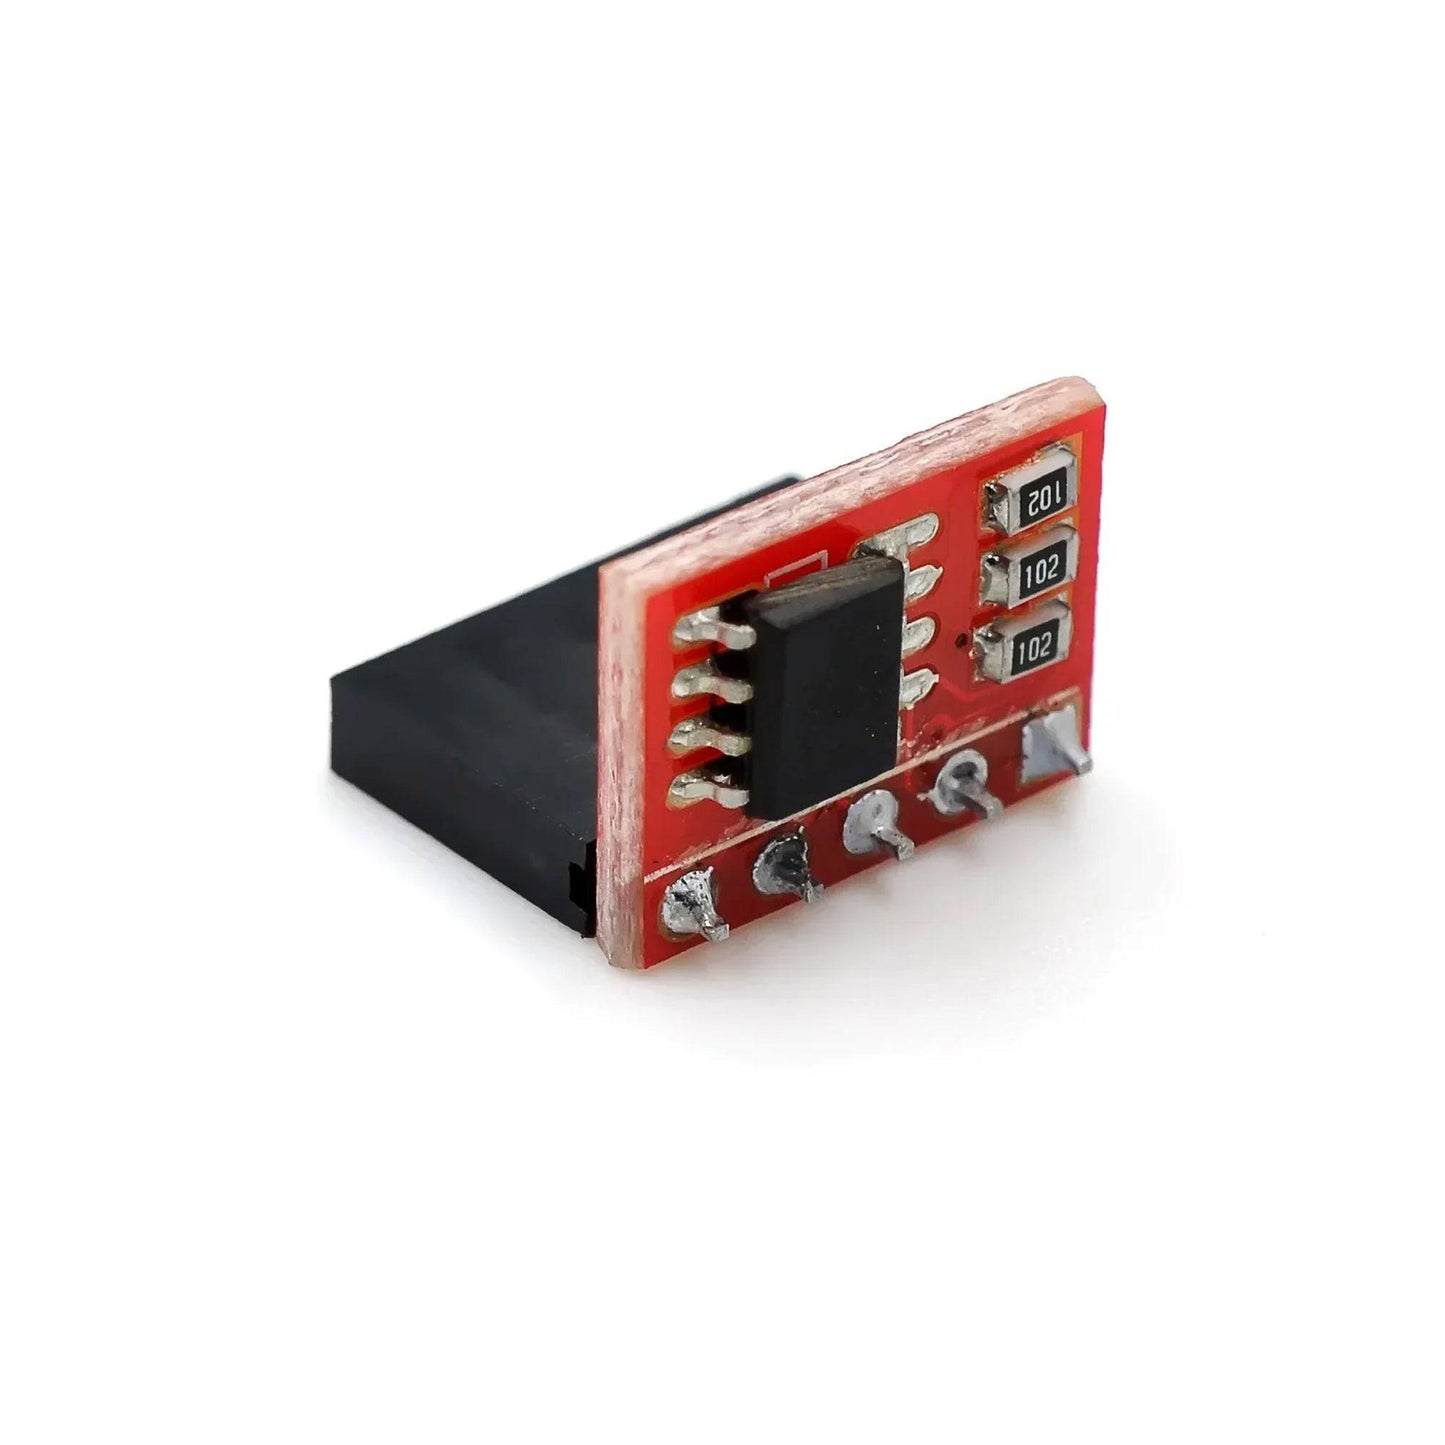 LM75 Temperature Sensor Module High Speed I2C Interface